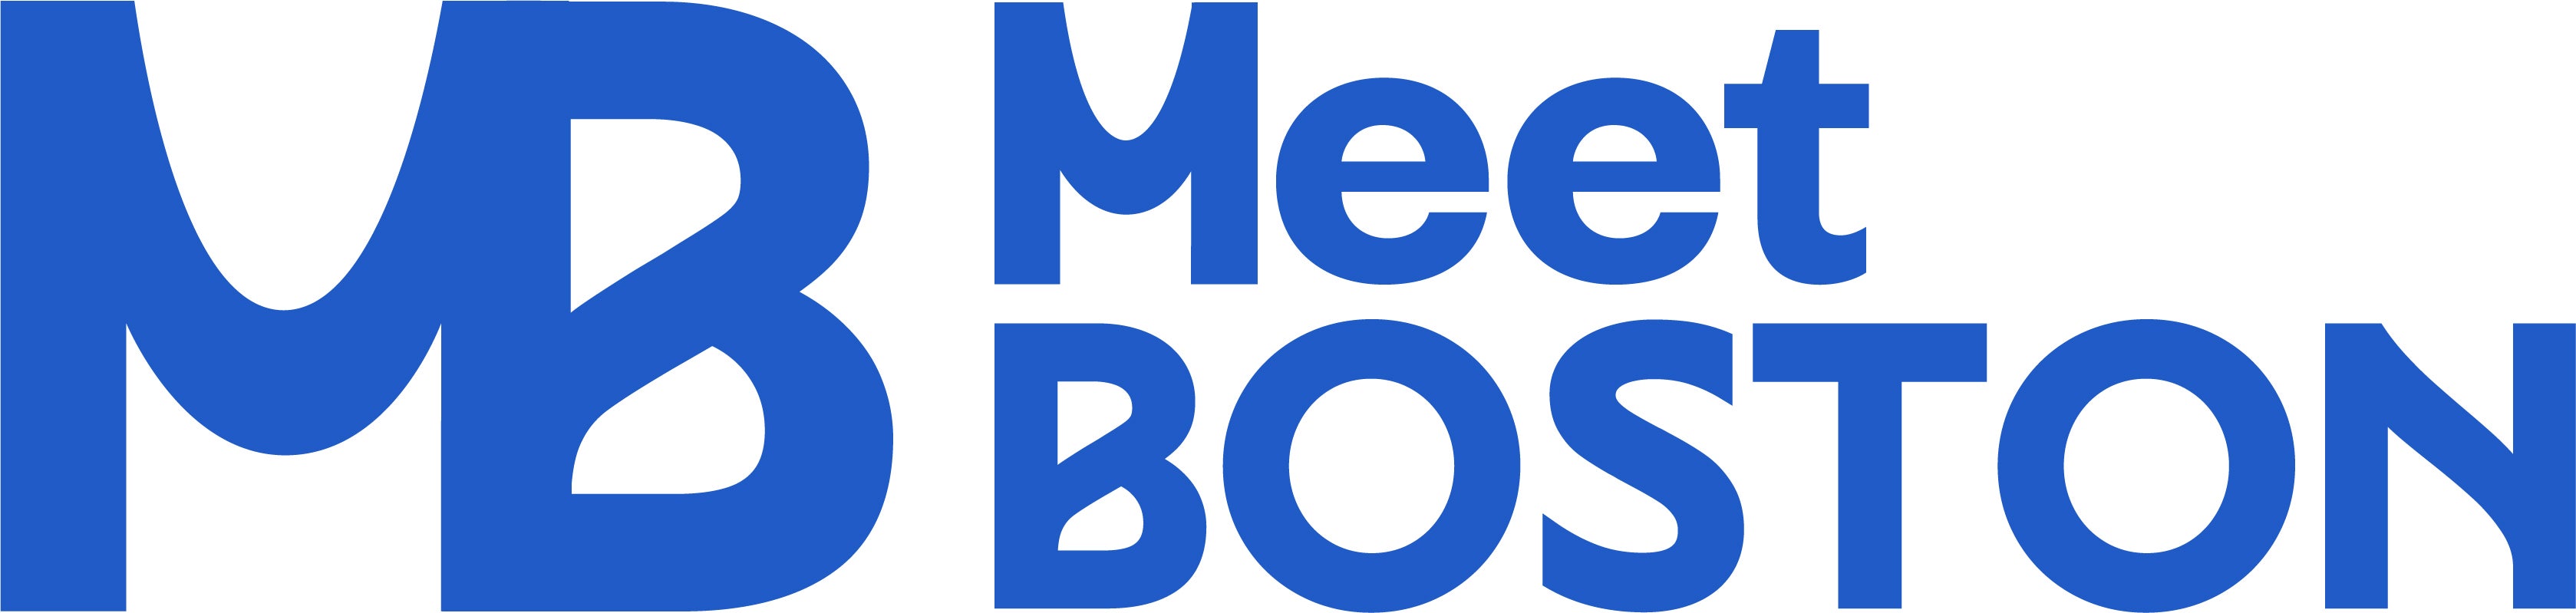 meet boston blue logo.jpg